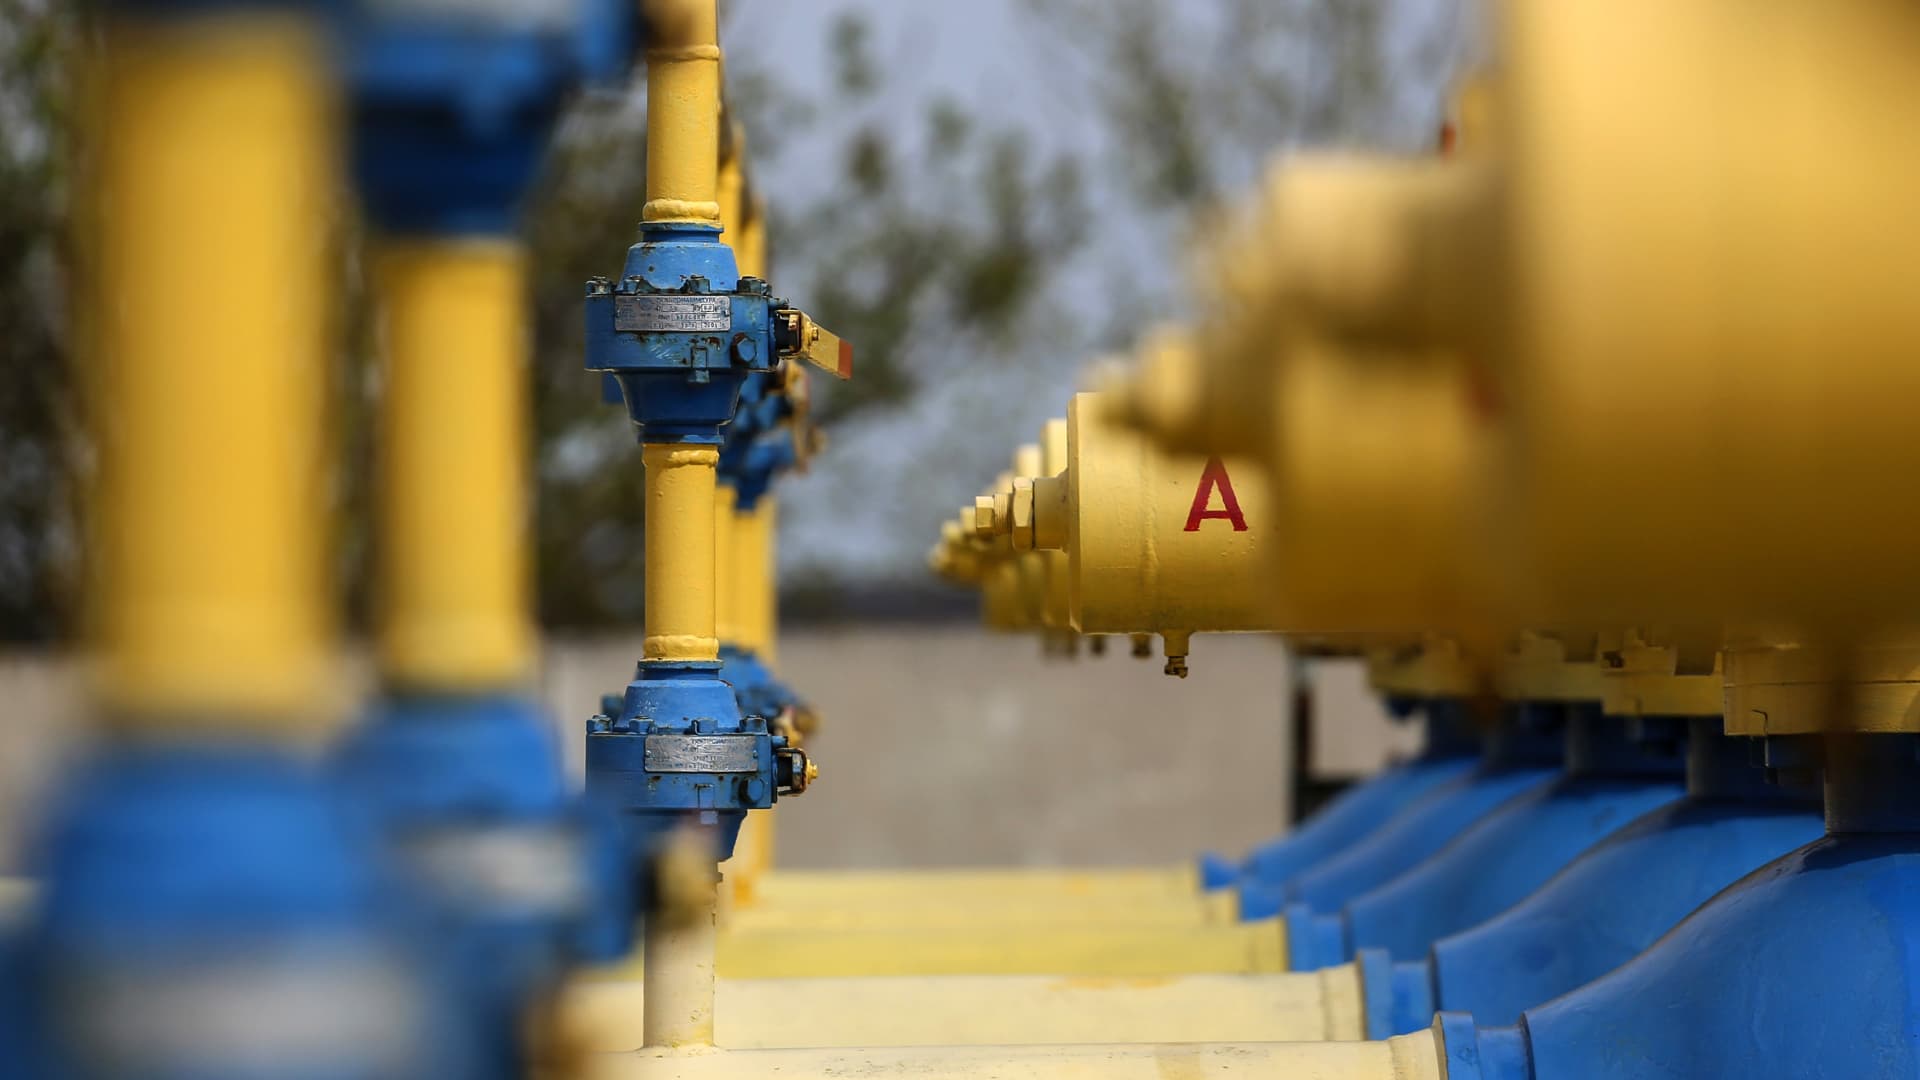 Flow regulator valves at a natural gas measuring station in Moldova.